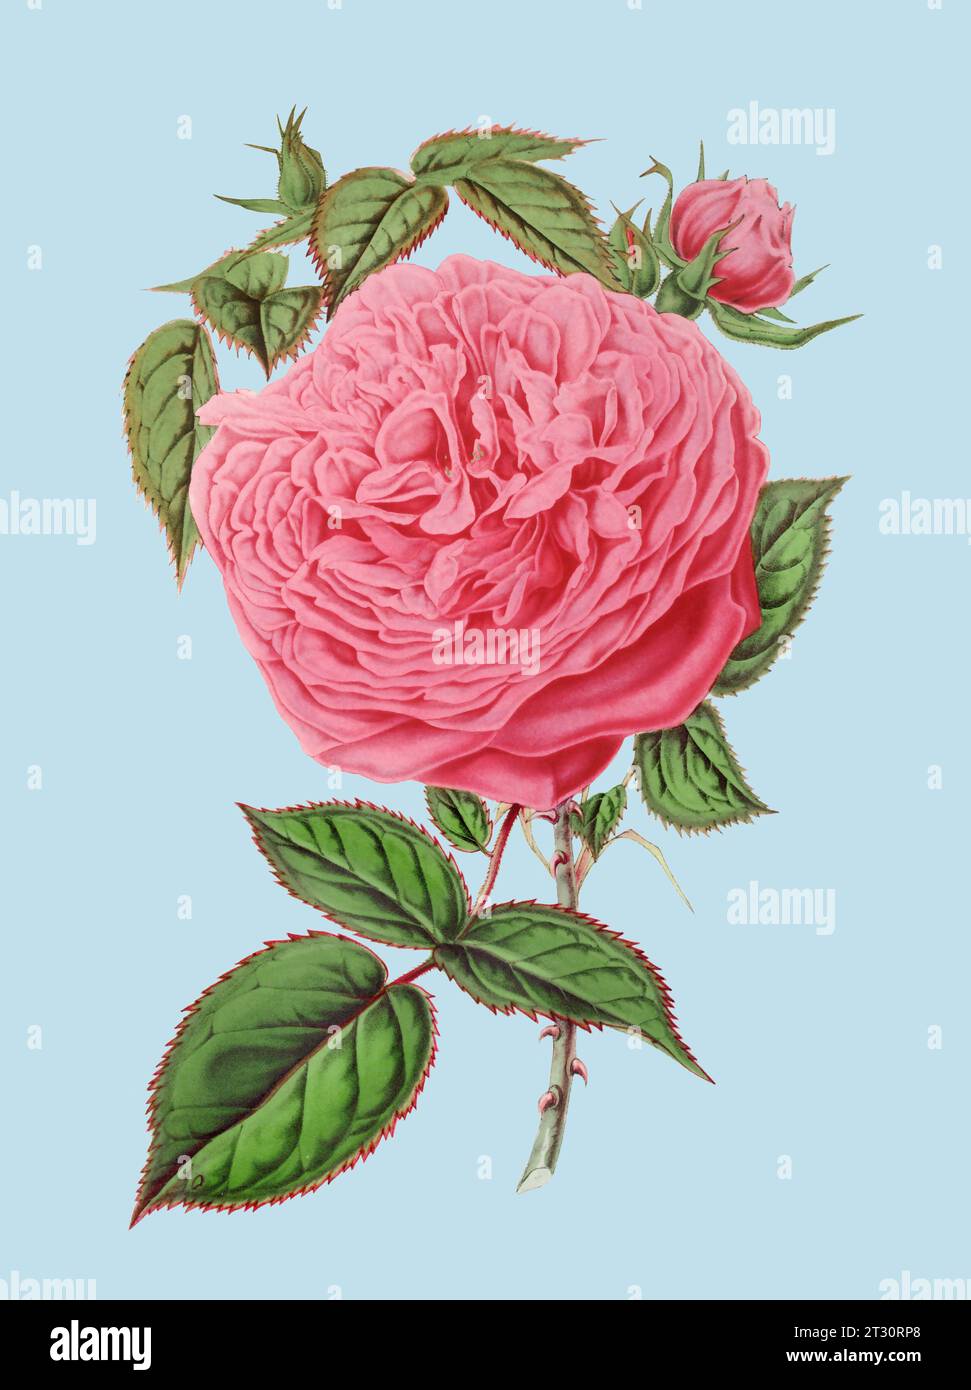 Colorful Rose Flower Illustration: A digital vintage-style flower on a plain light blue background. Stock Photo